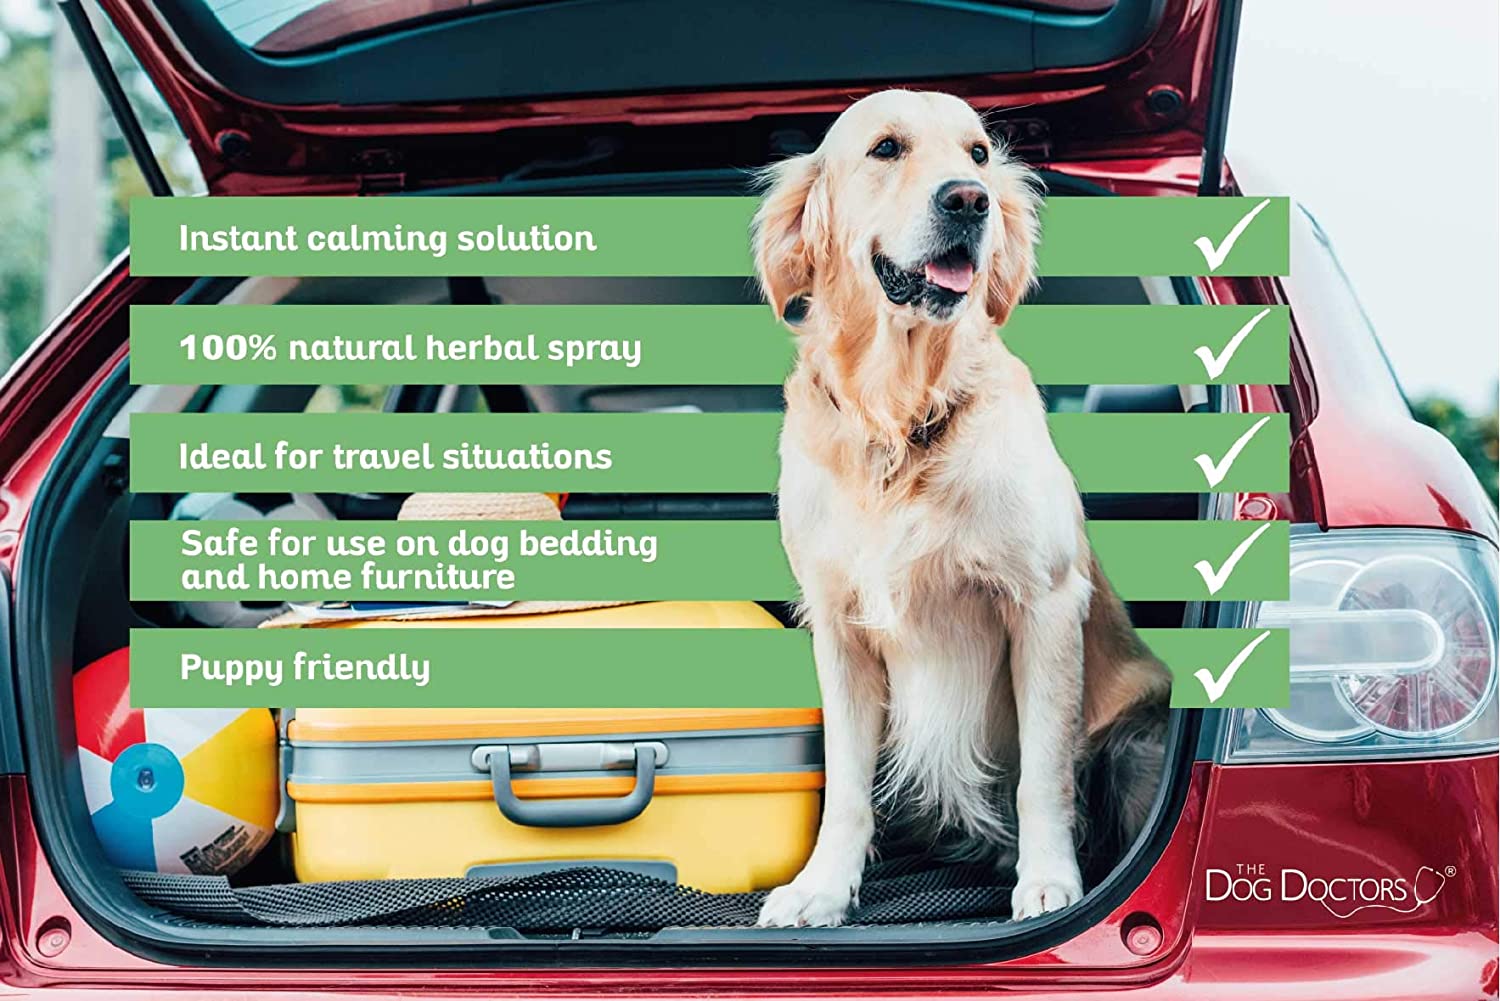  The Dog Doctors Spray calmante de Hierbas Ideal para Mascotas, solución calmante para Perros para Viajar o en Momentos de Necesidad, 240 ml 